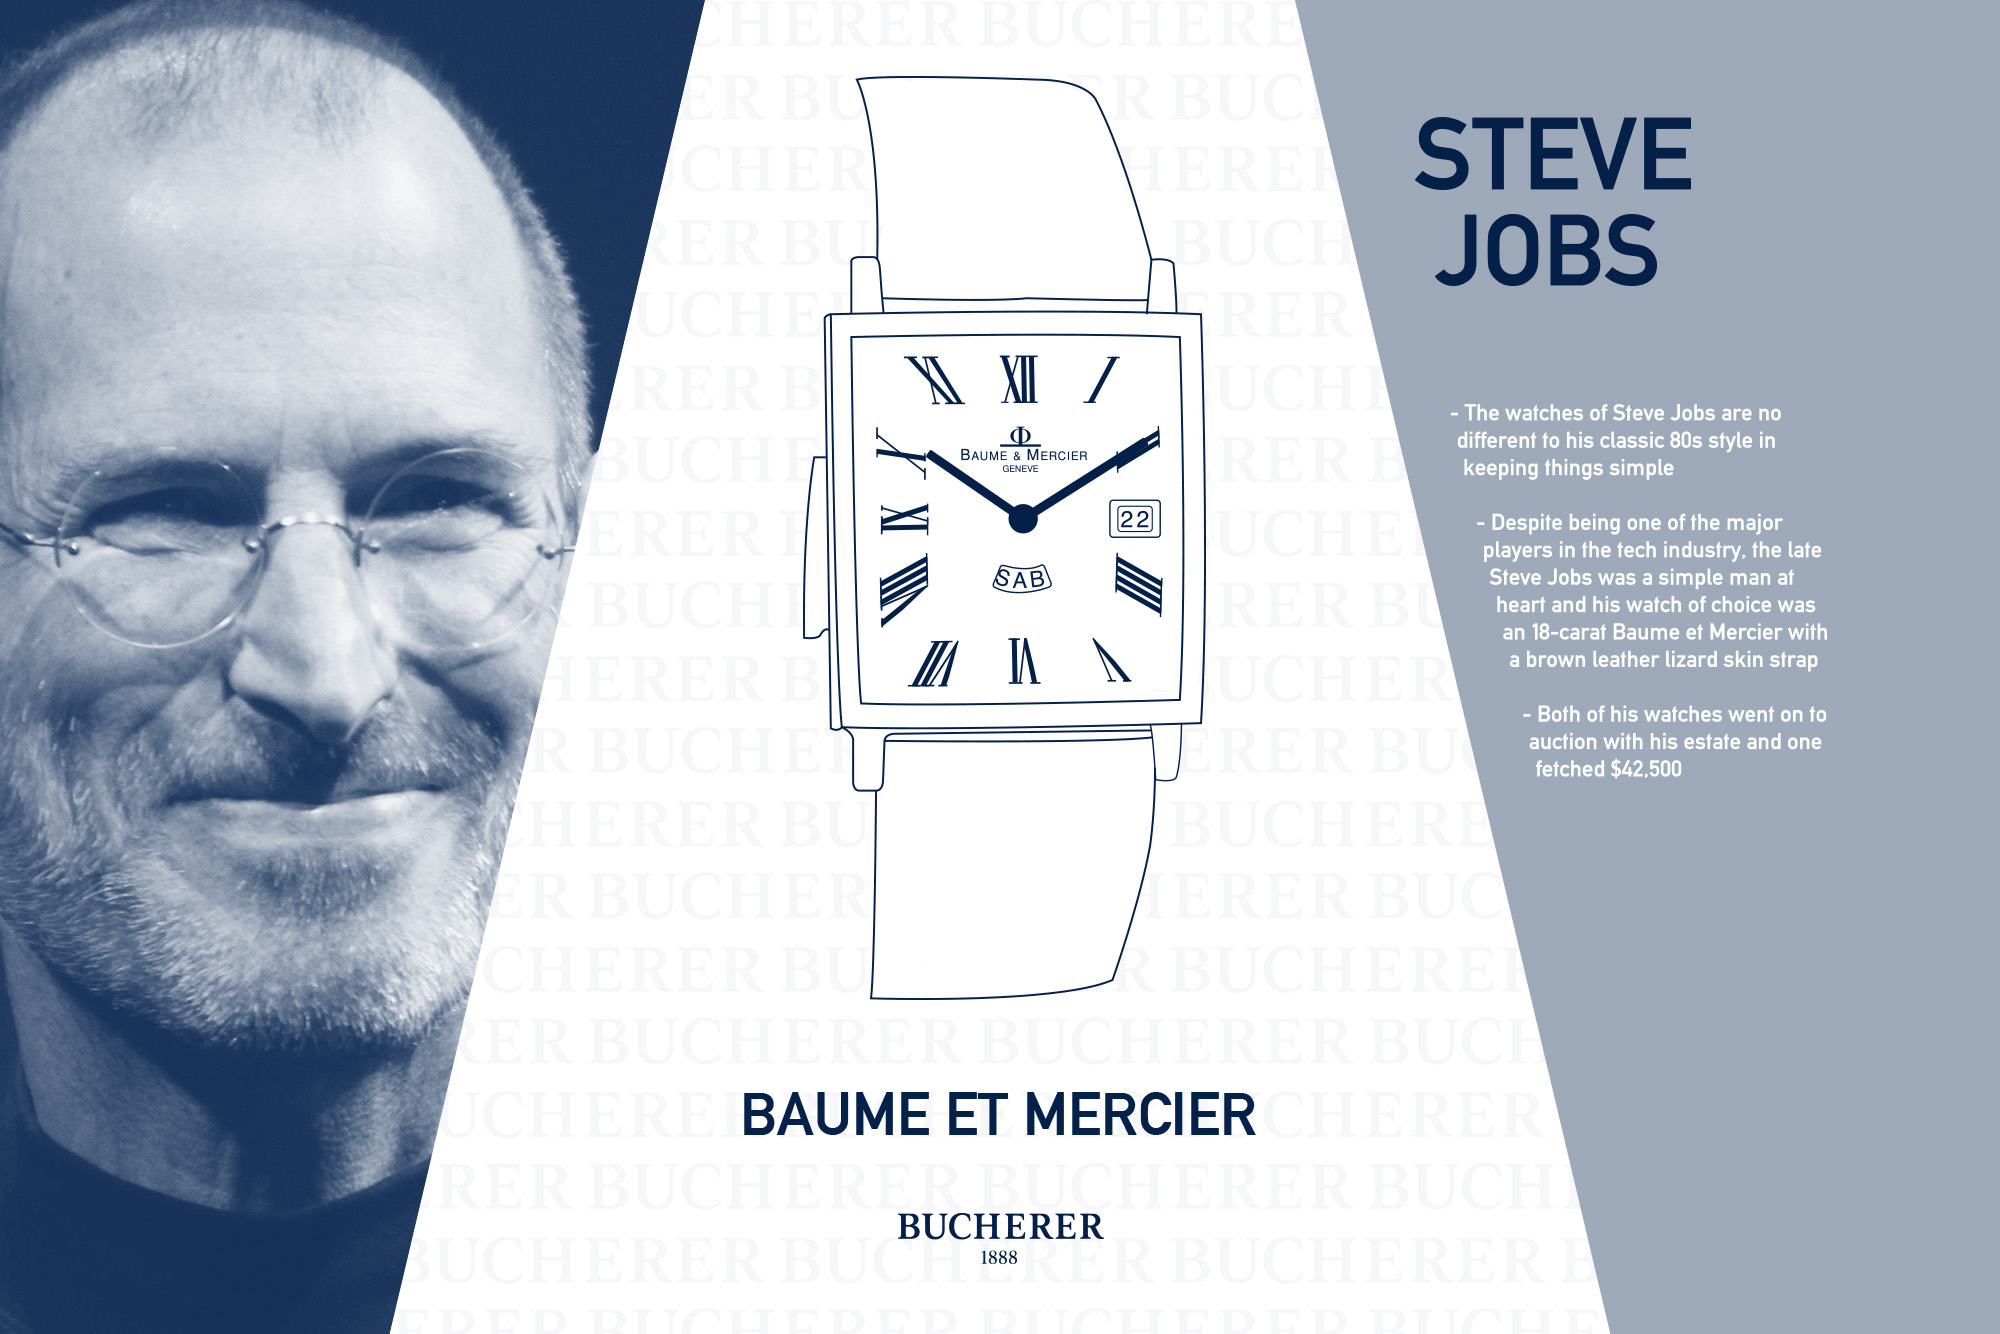 steve-jobs-and-his-baume-et-mercier-watch